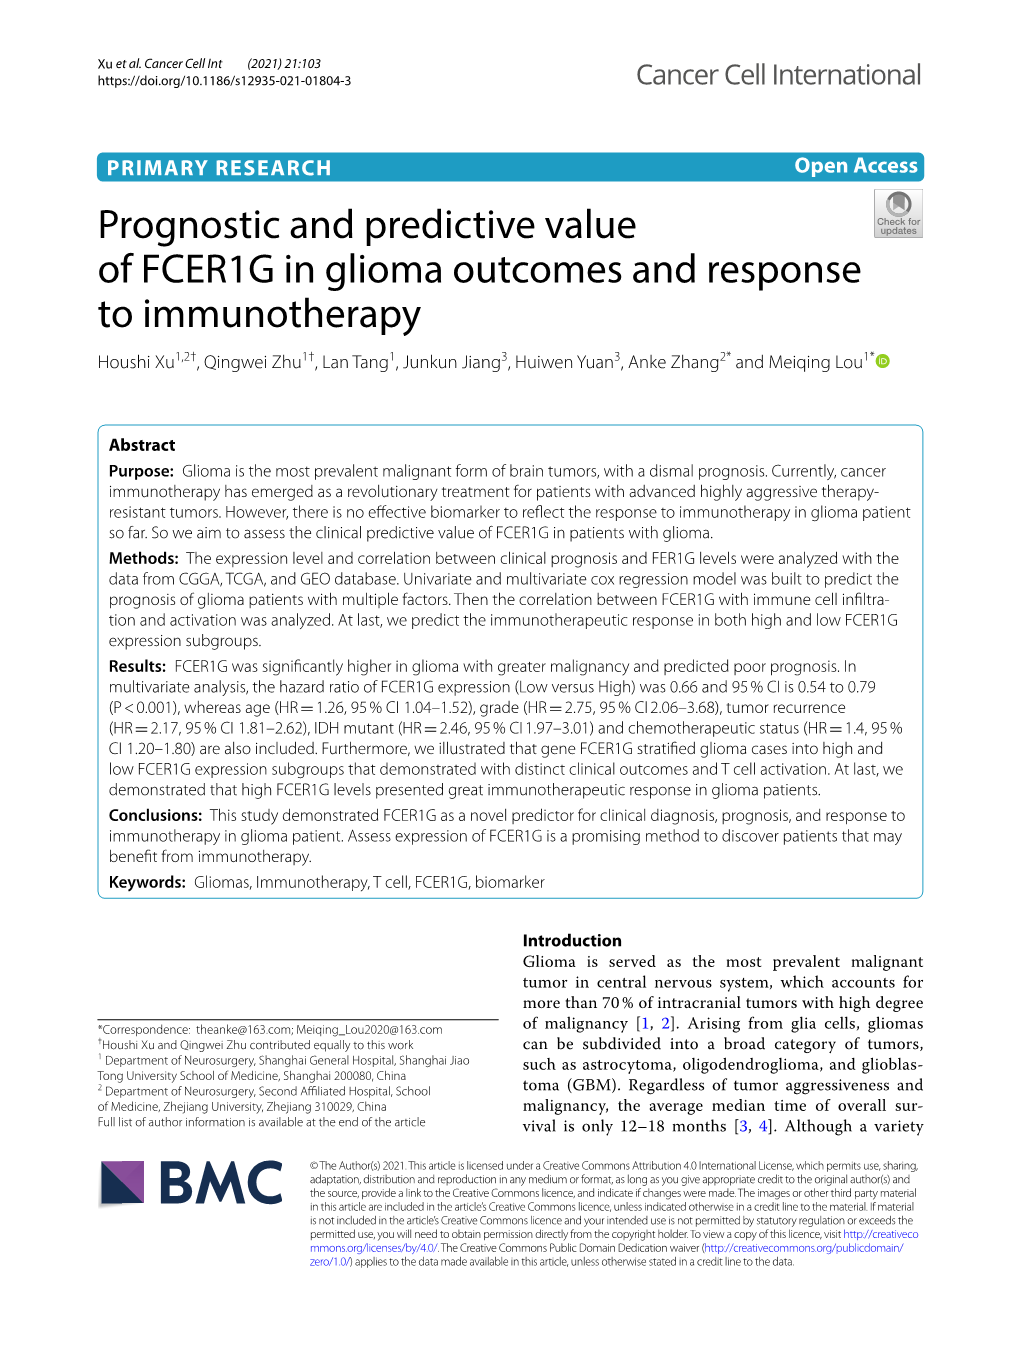 Prognostic and Predictive Value of FCER1G in Glioma Outcomes and Response to Immunotherapy